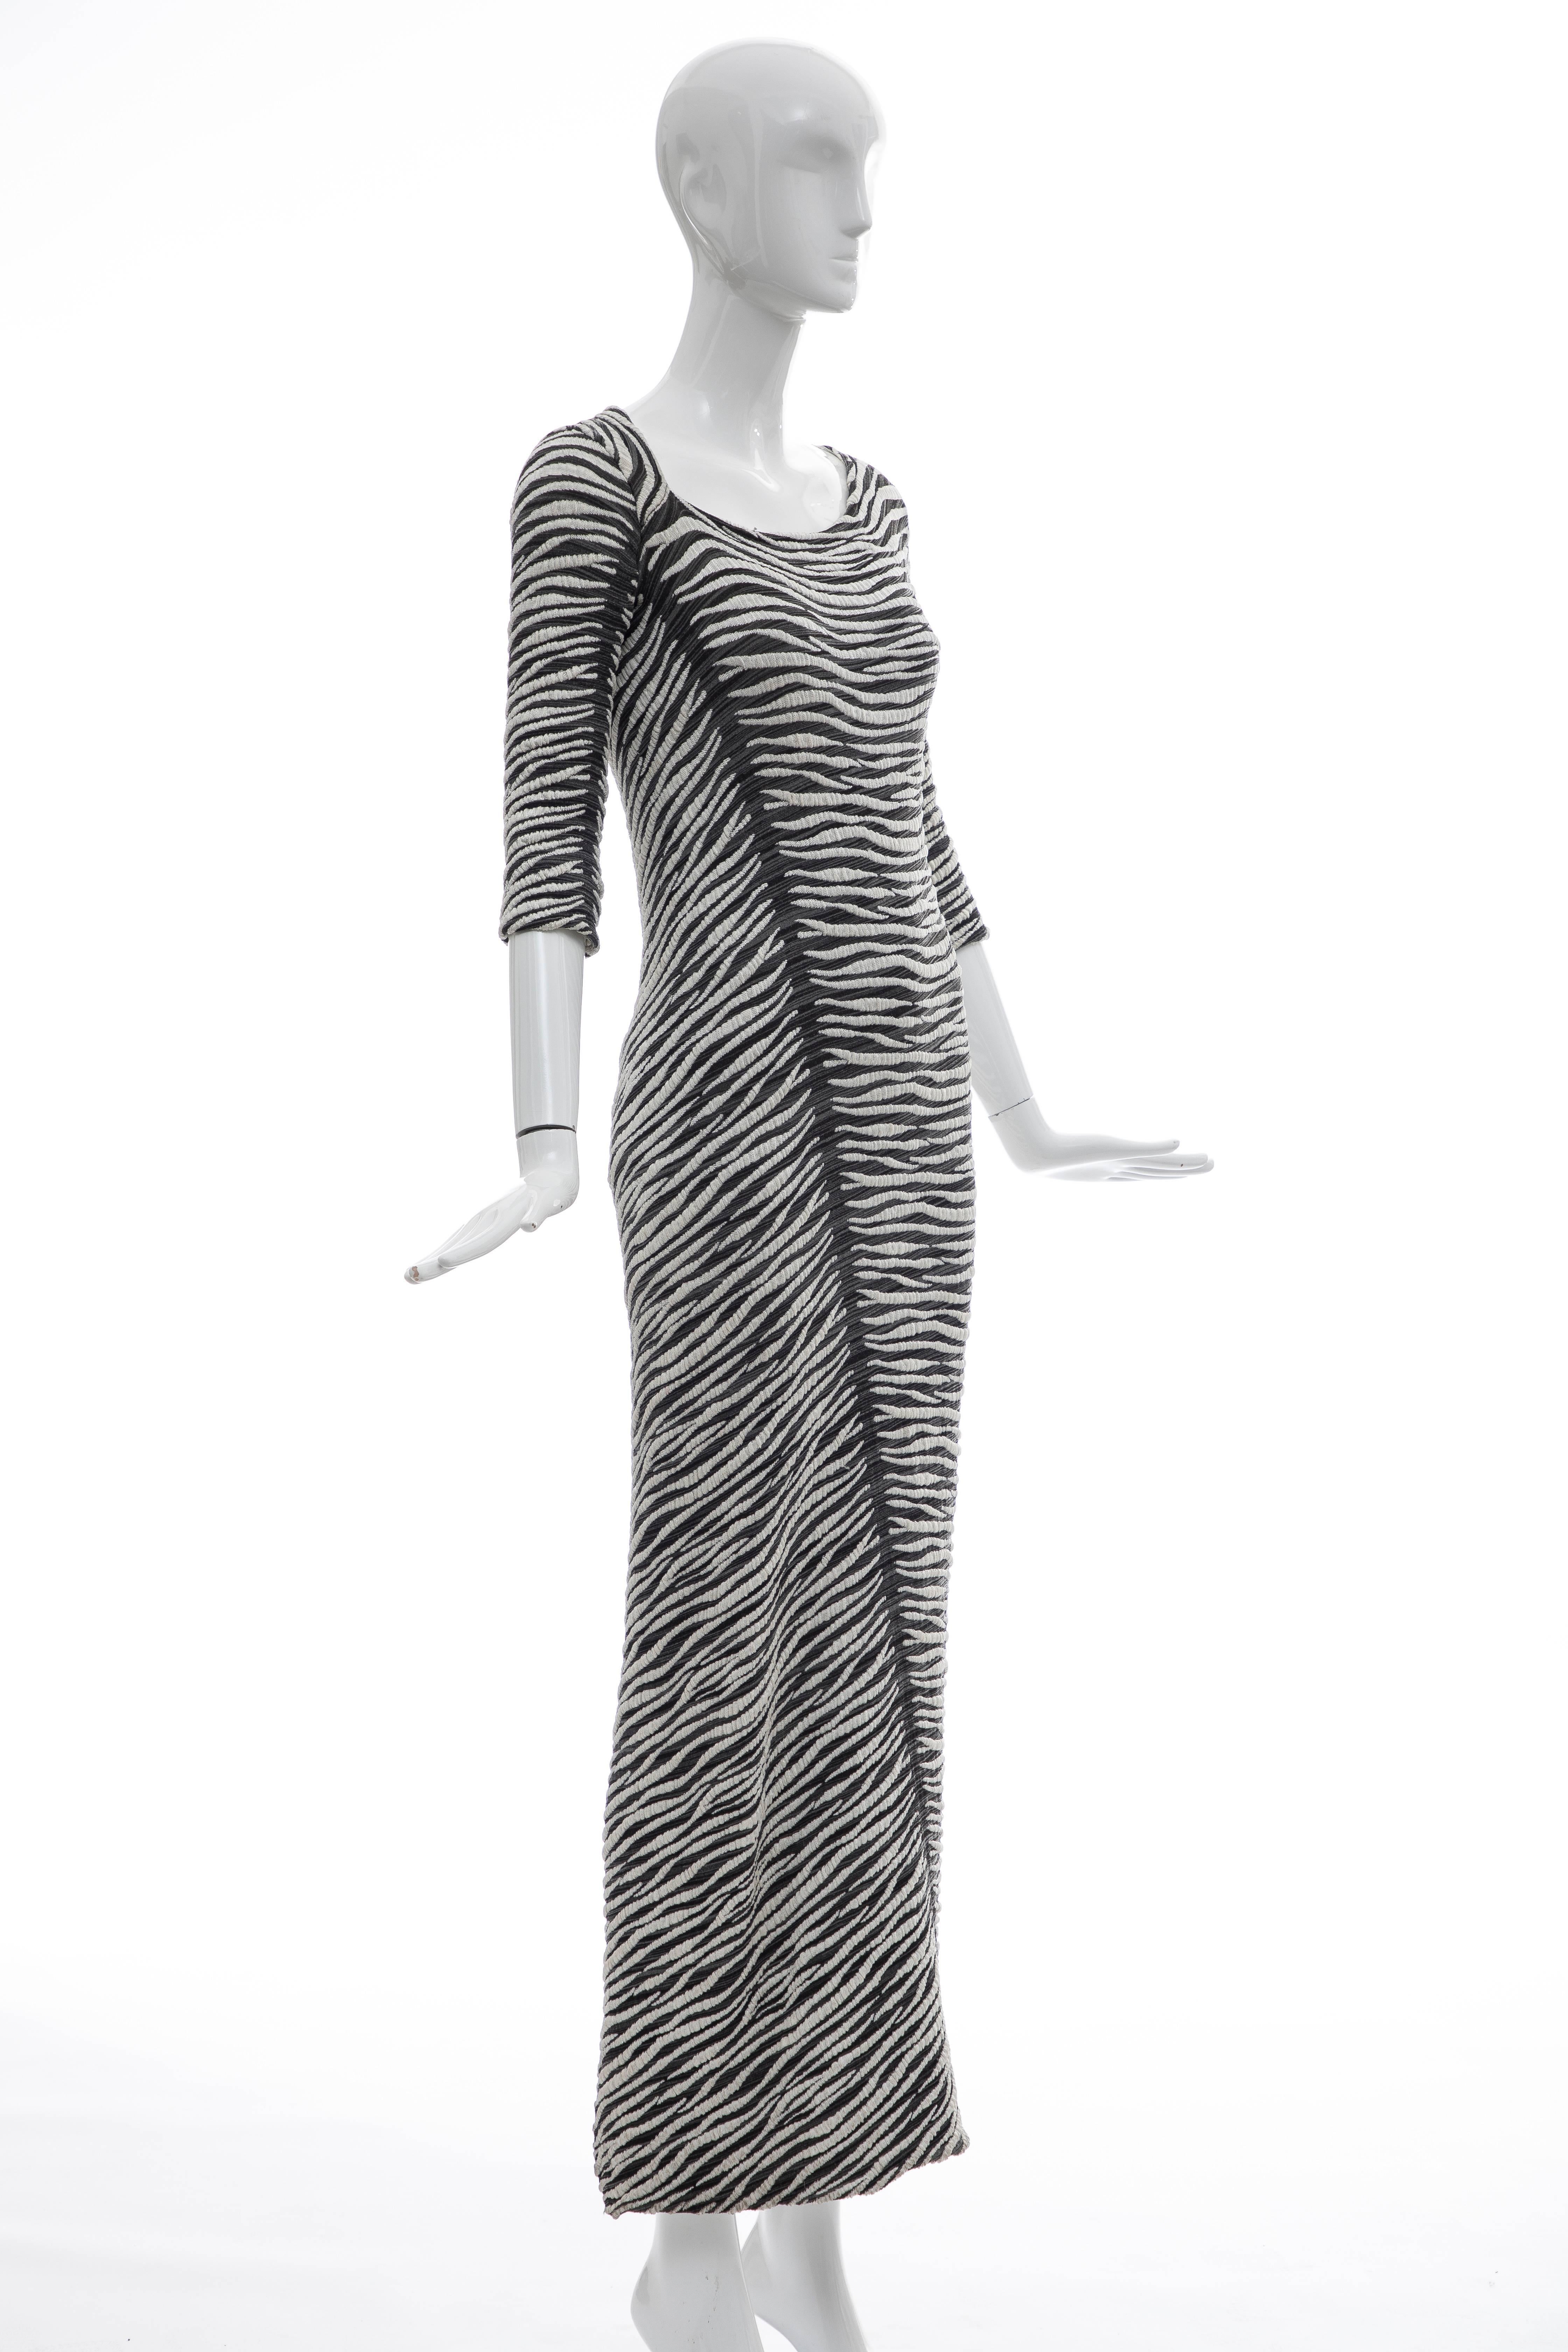 Black Gianfranco Ferre Long Sleeve Stretch Knit Dress, Circa 1990's For Sale